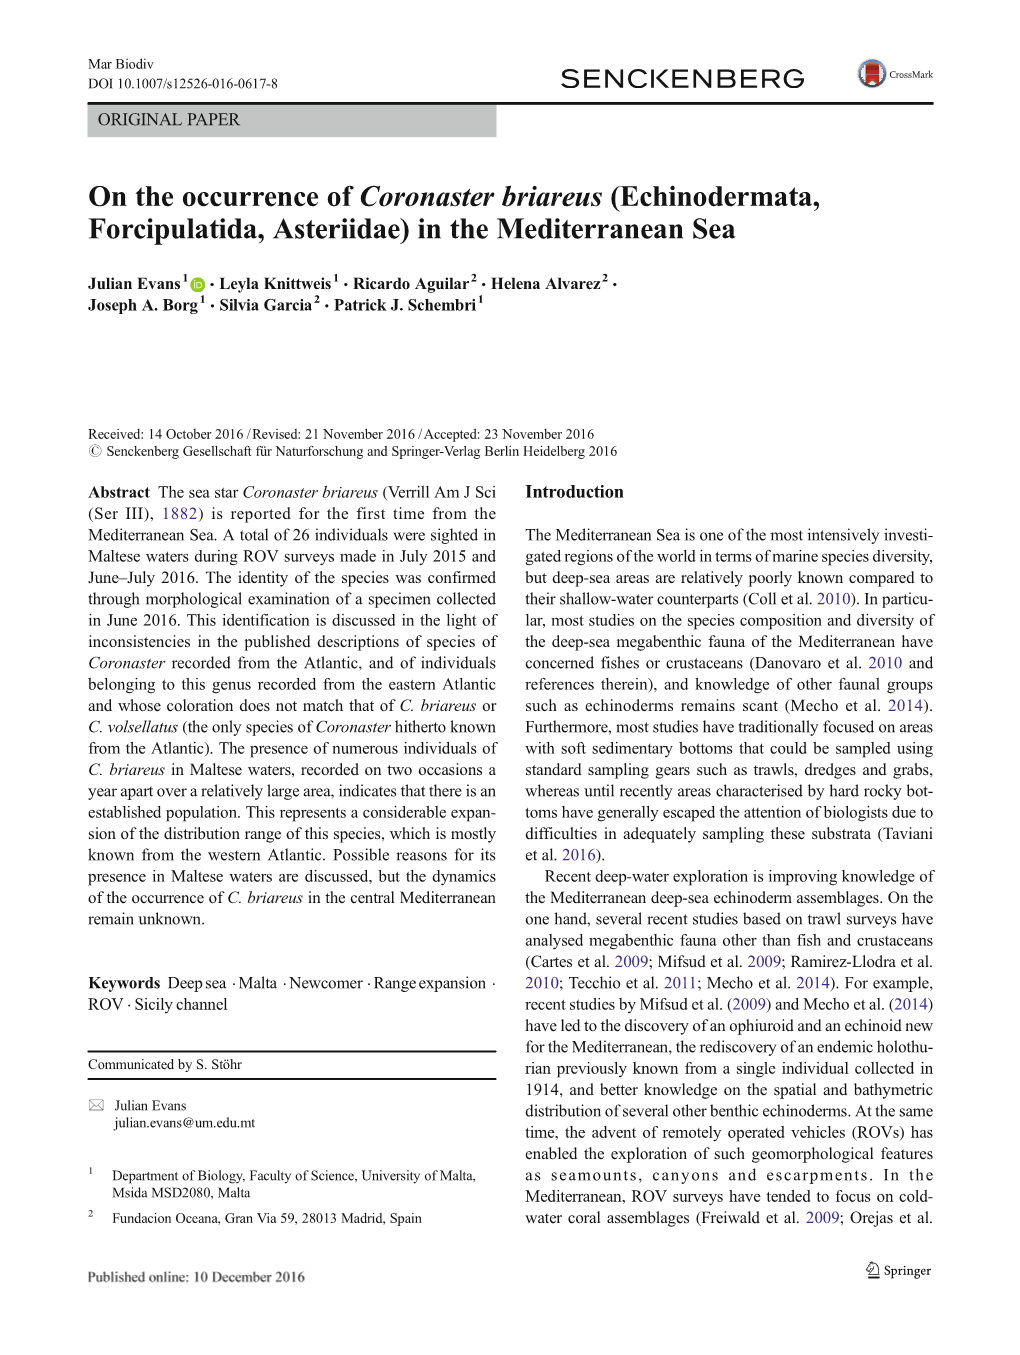 On the Occurrence of Coronaster Briareus (Echinodermata, Forcipulatida, Asteriidae) in the Mediterranean Sea